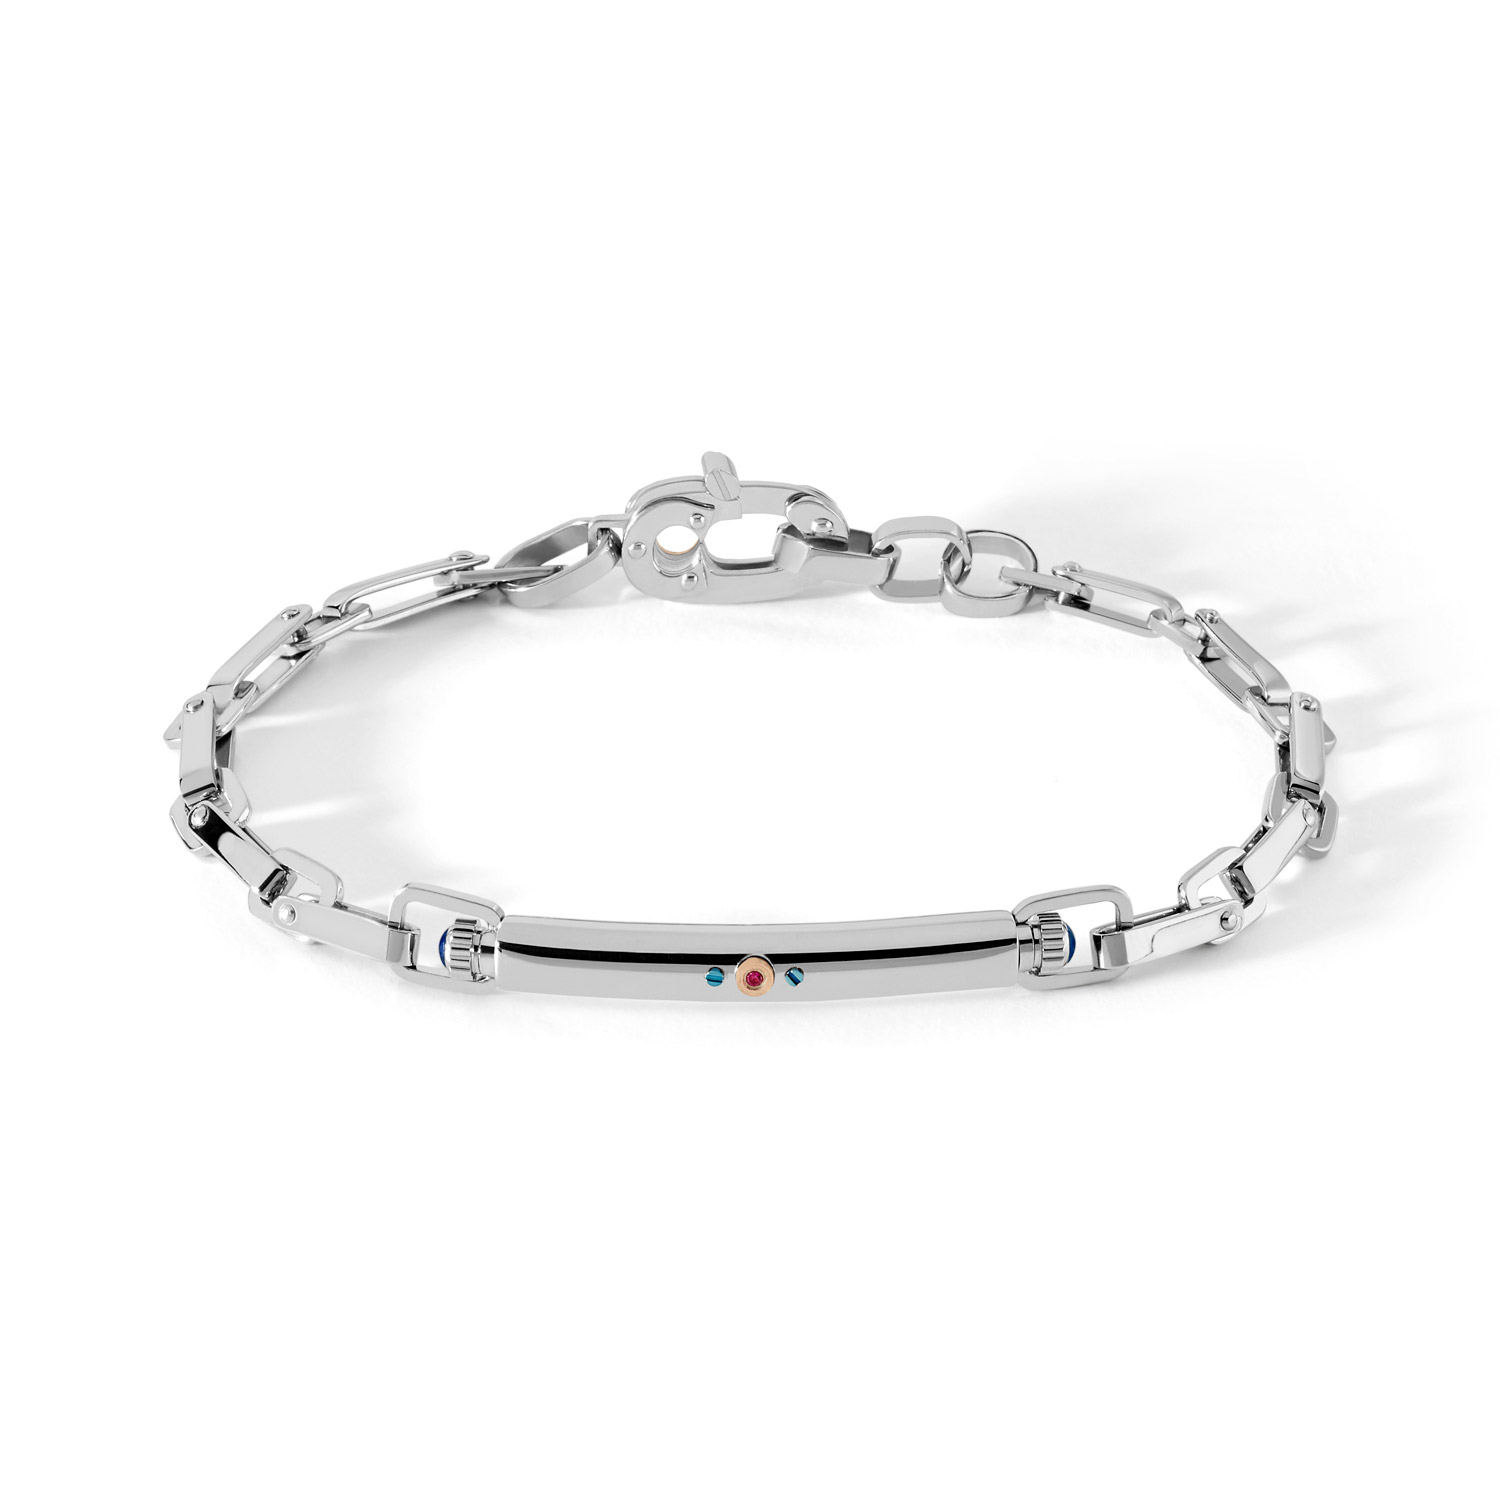 Comet Jewelry Men's Chain Bracelet with Steel Plate